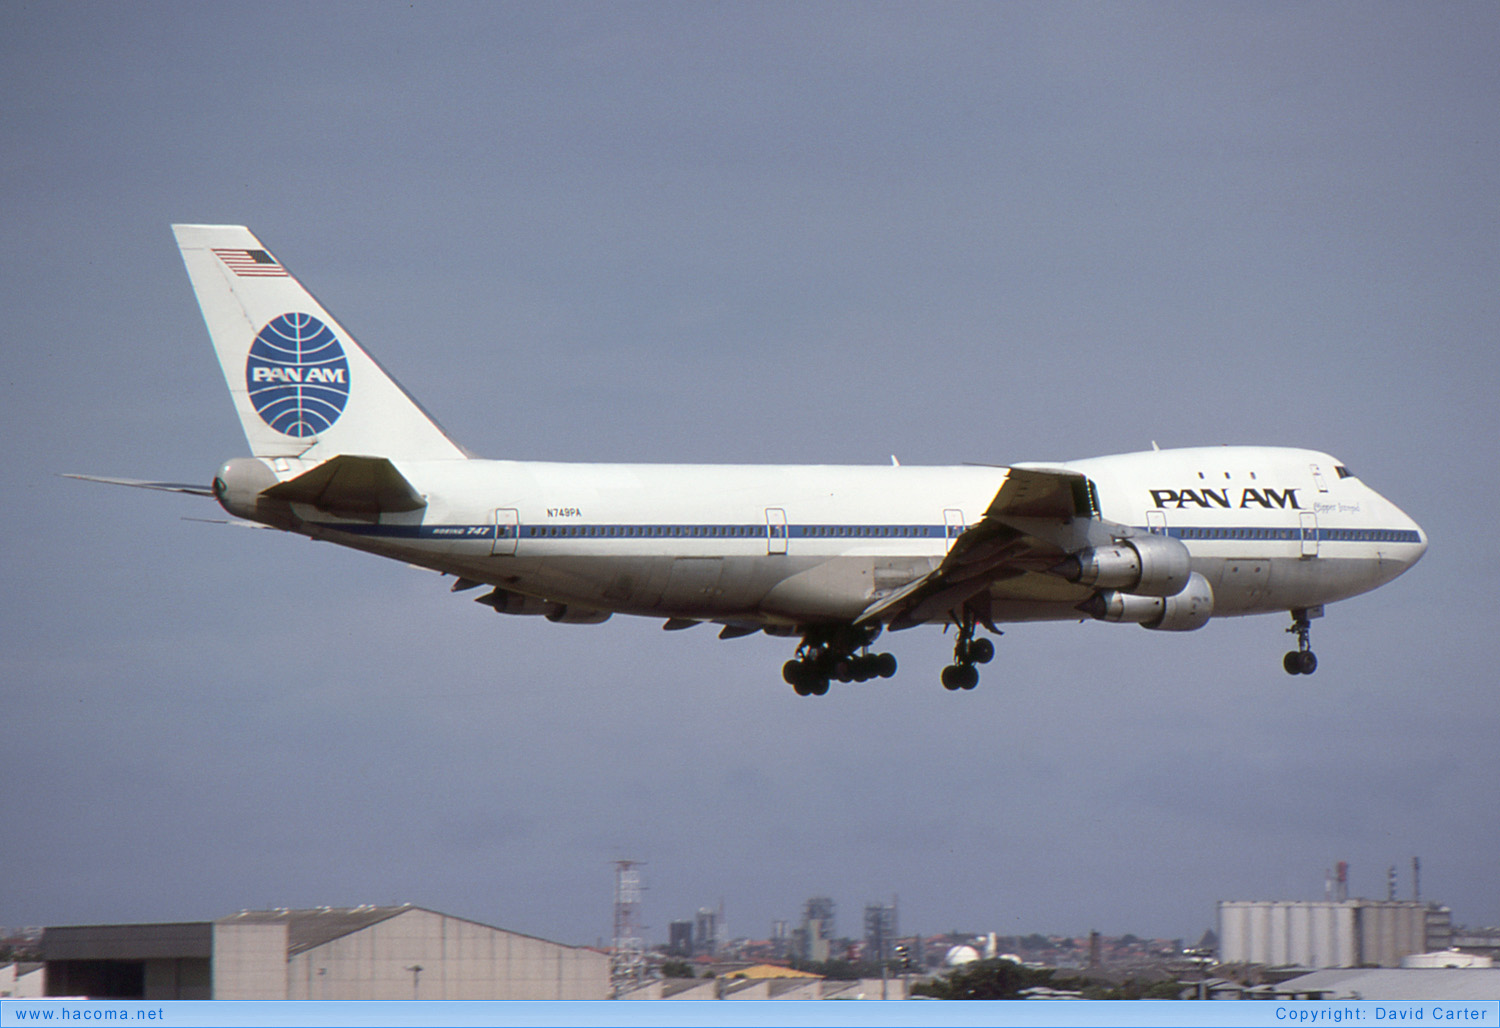 Photo of N749PA - Pan Am Clipper Intrepid / Dashing Wave - Sydney Airport - Jan 1980